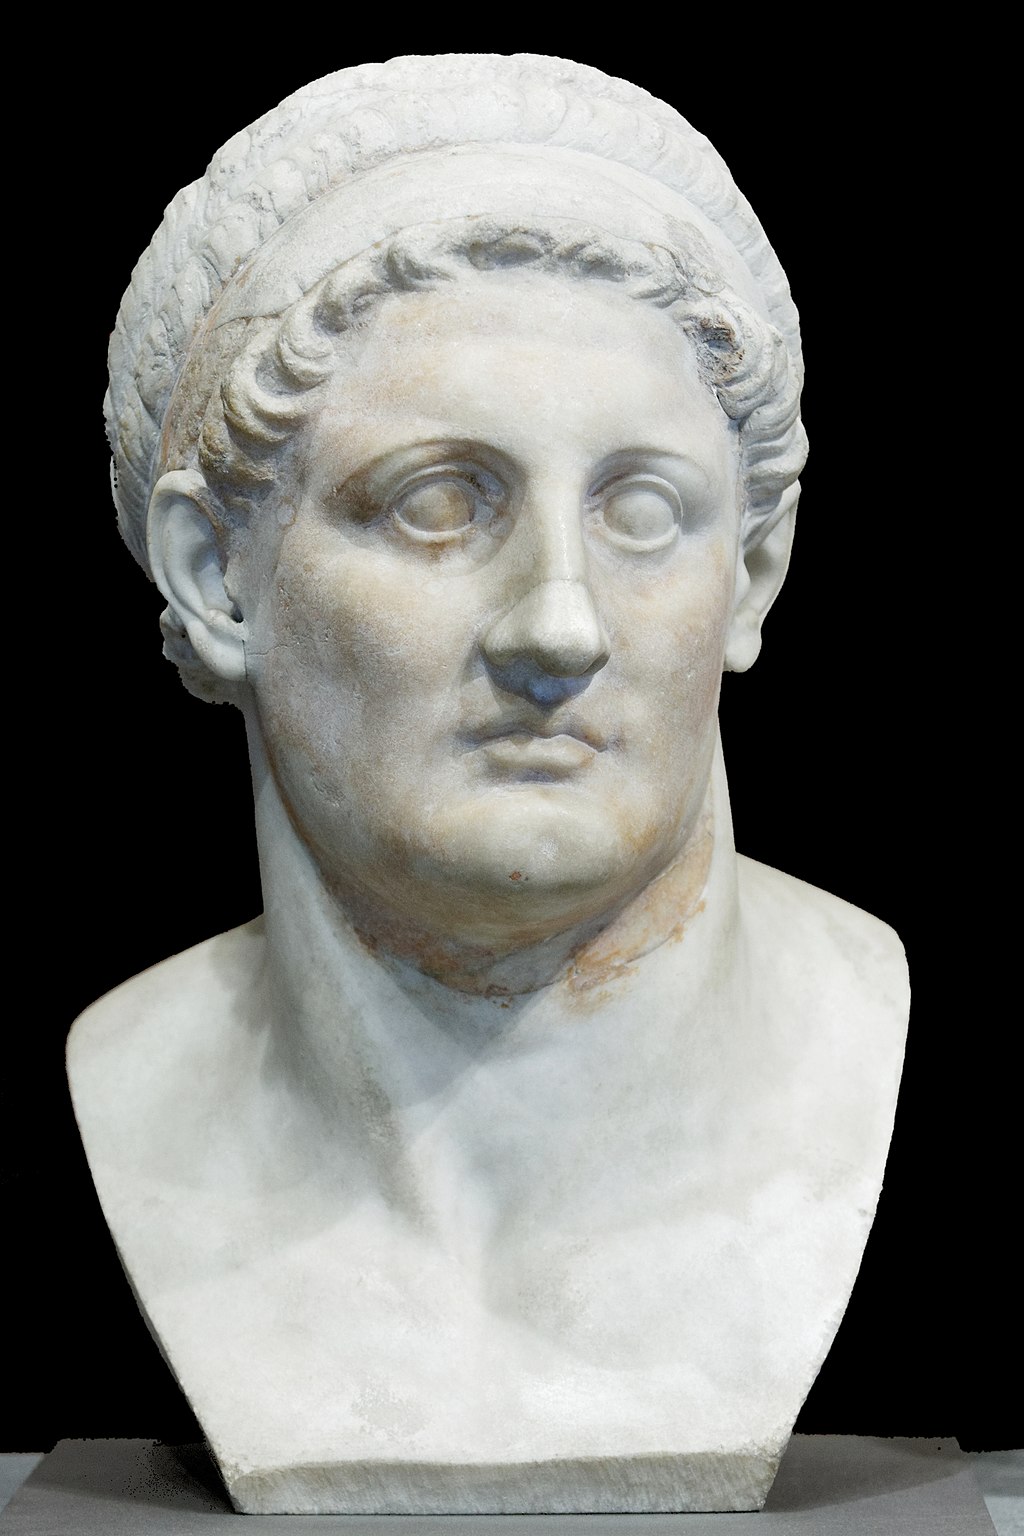 Ptolemeusz I Soter (III w p.n.e.) | HISTORIA.org.pl - historia, kultura ...